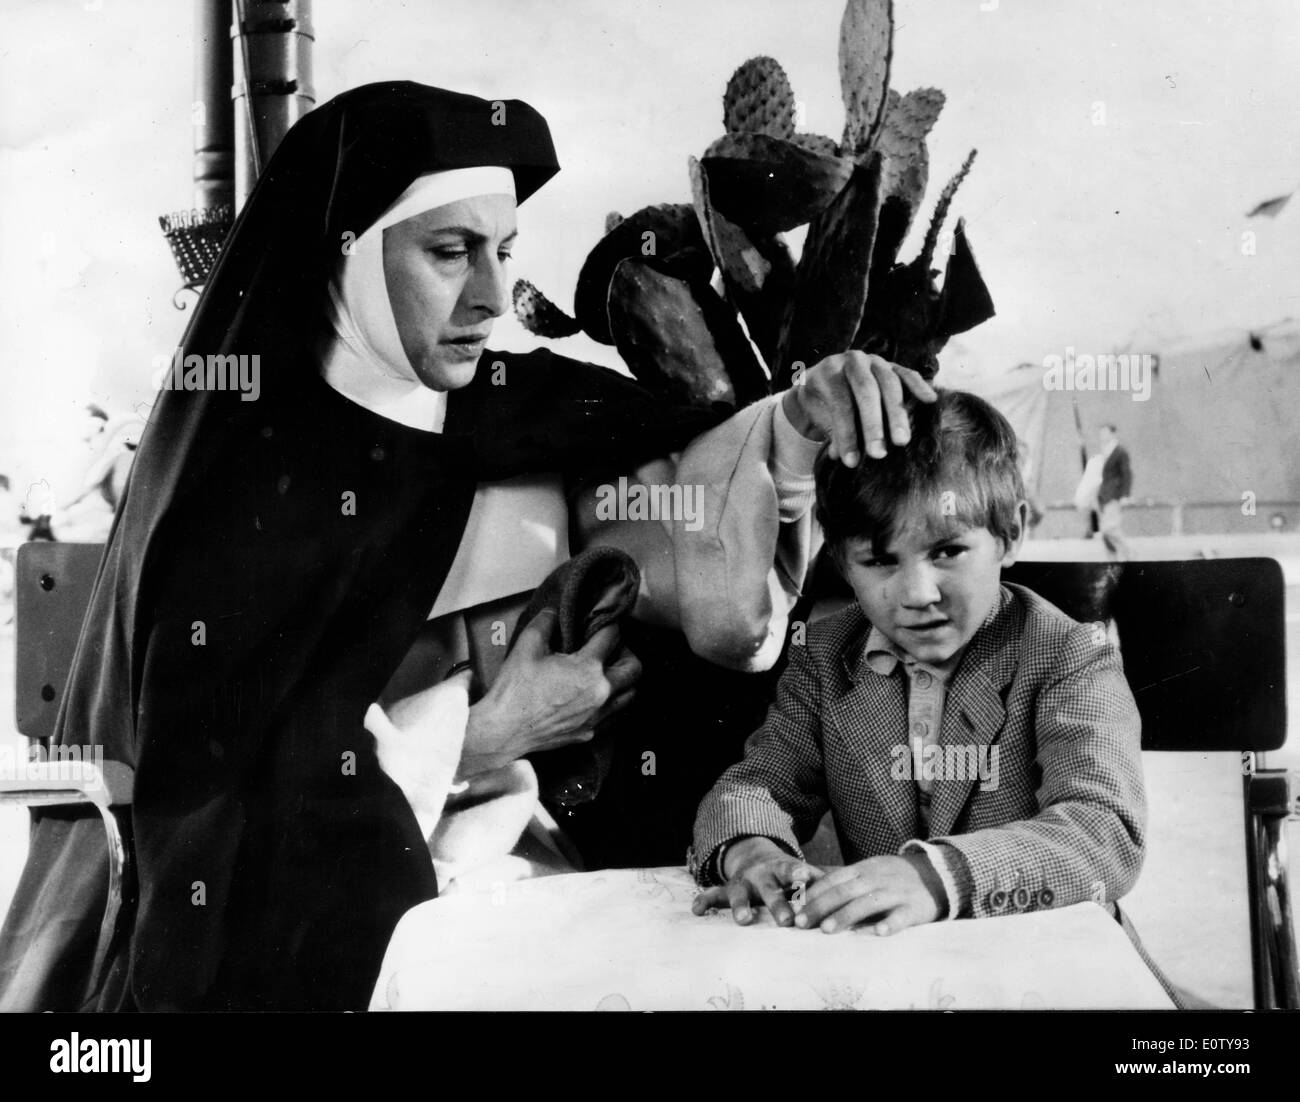 Actress Anna Magnani as nun in film scene Stock Photo